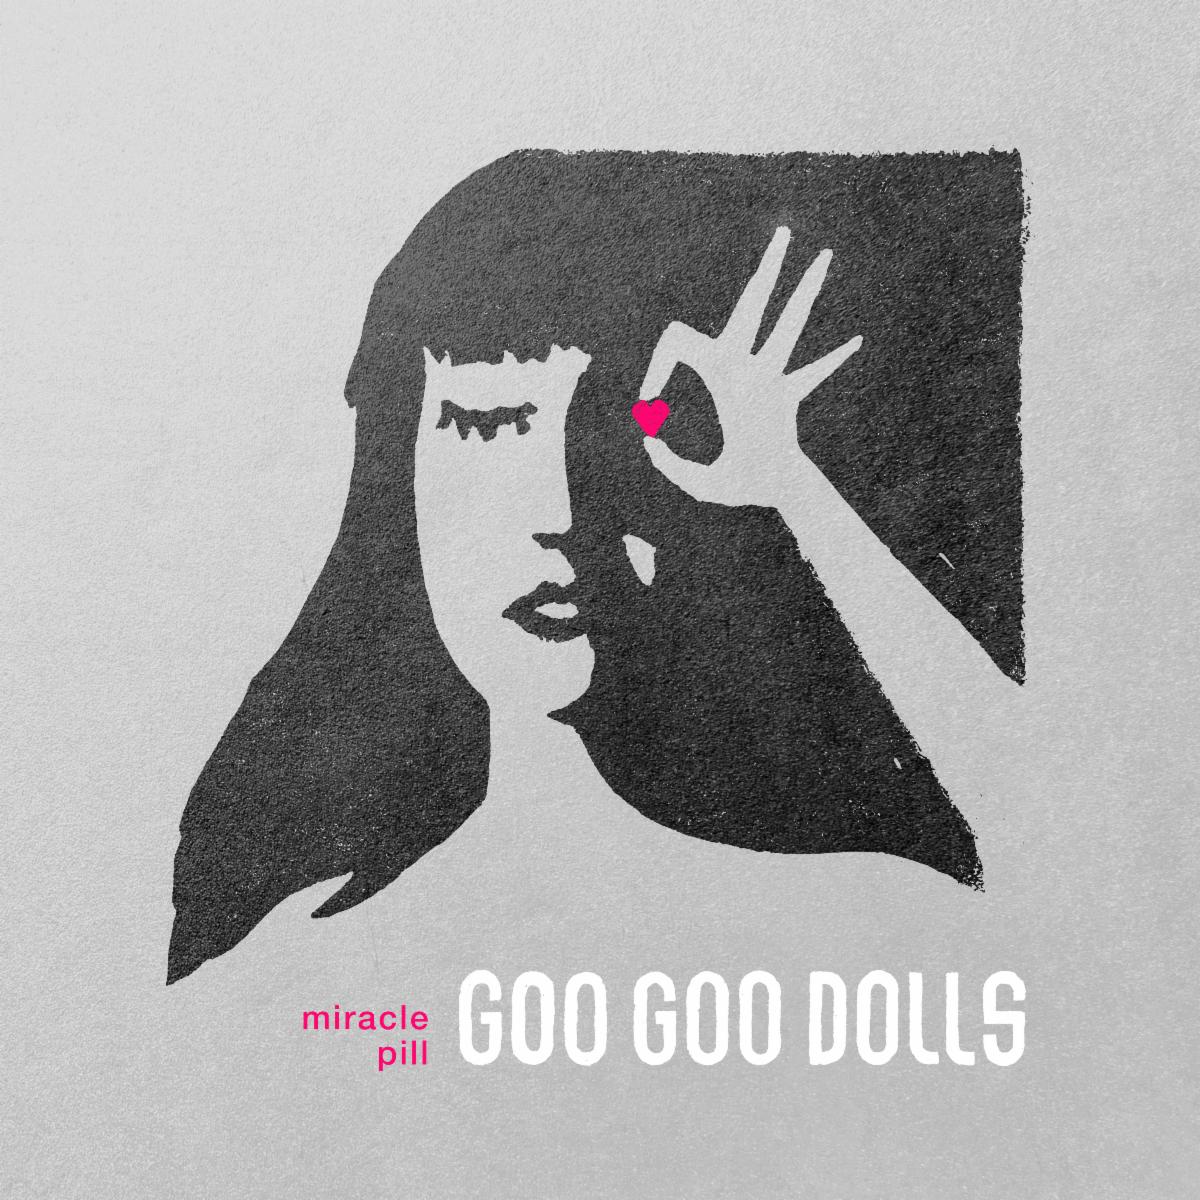 goo goo dolls, miracle pill